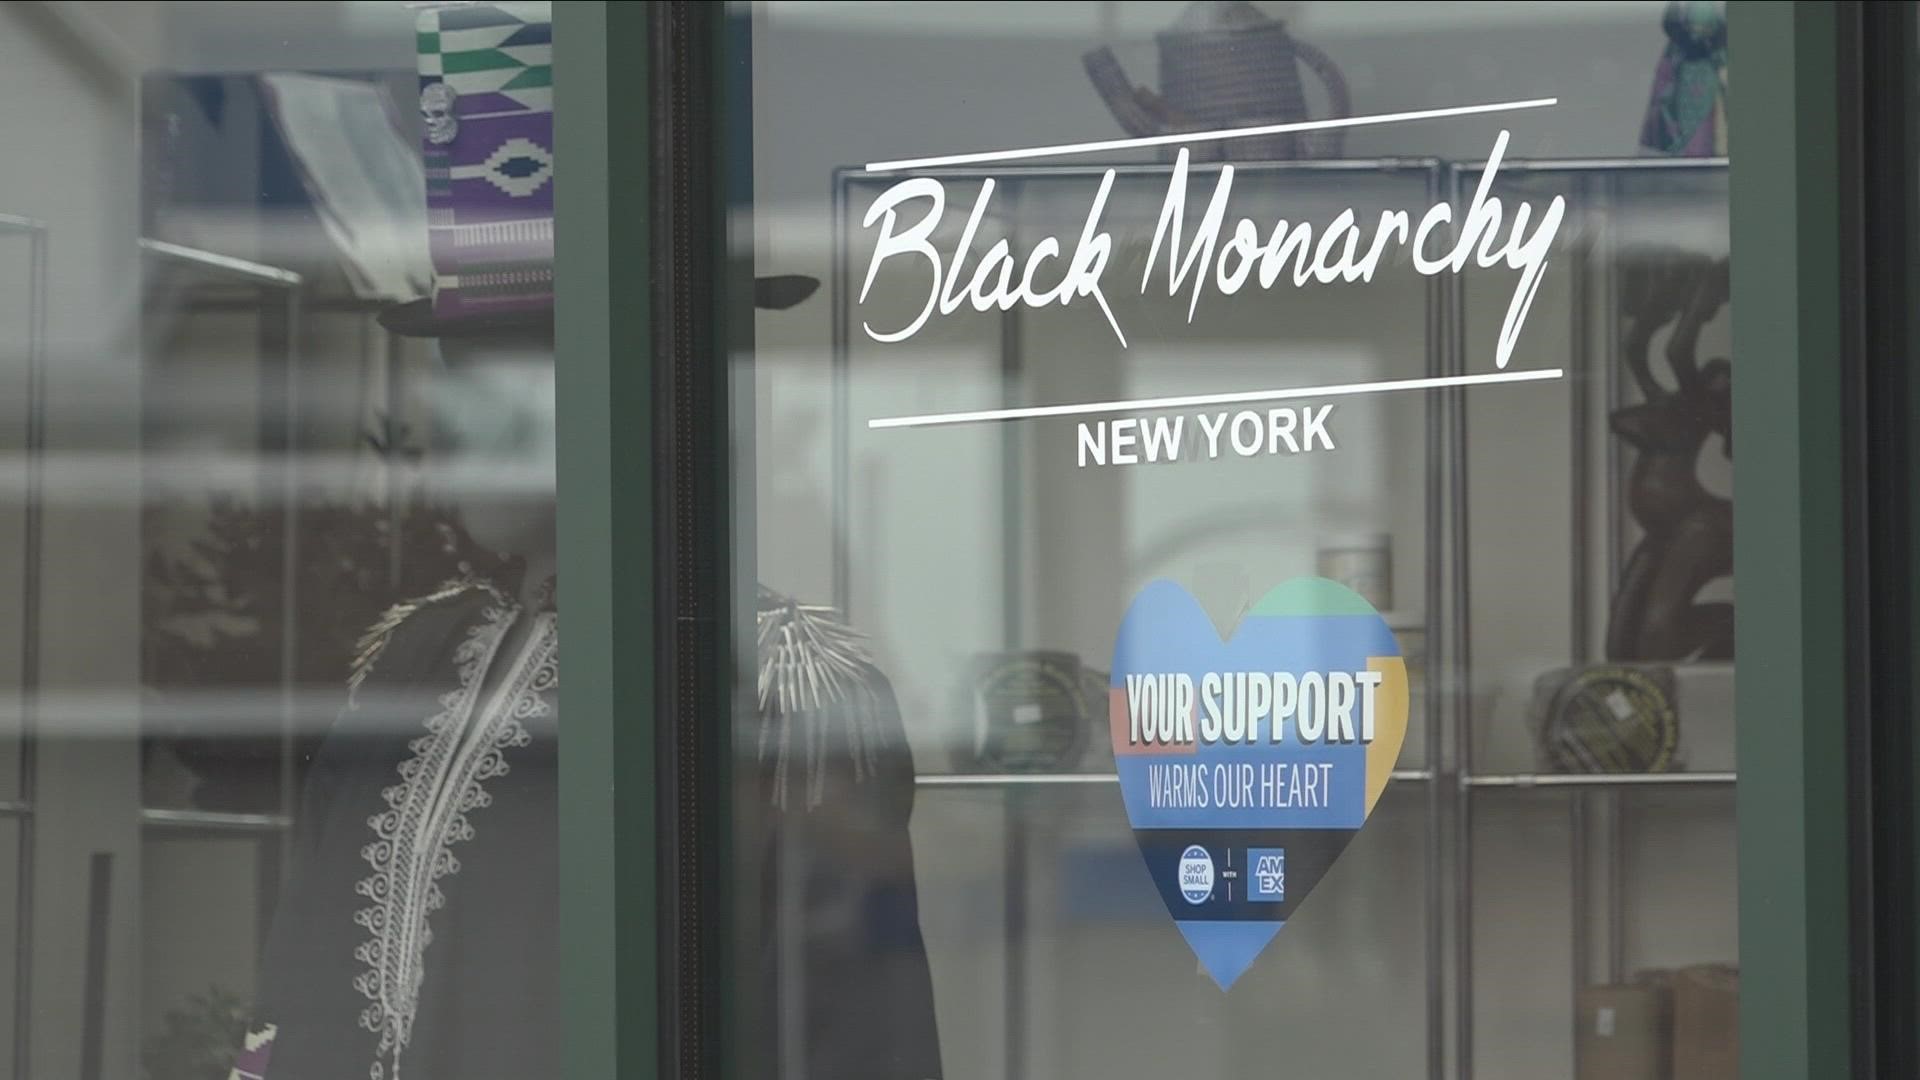 Local Black owned business burglarized